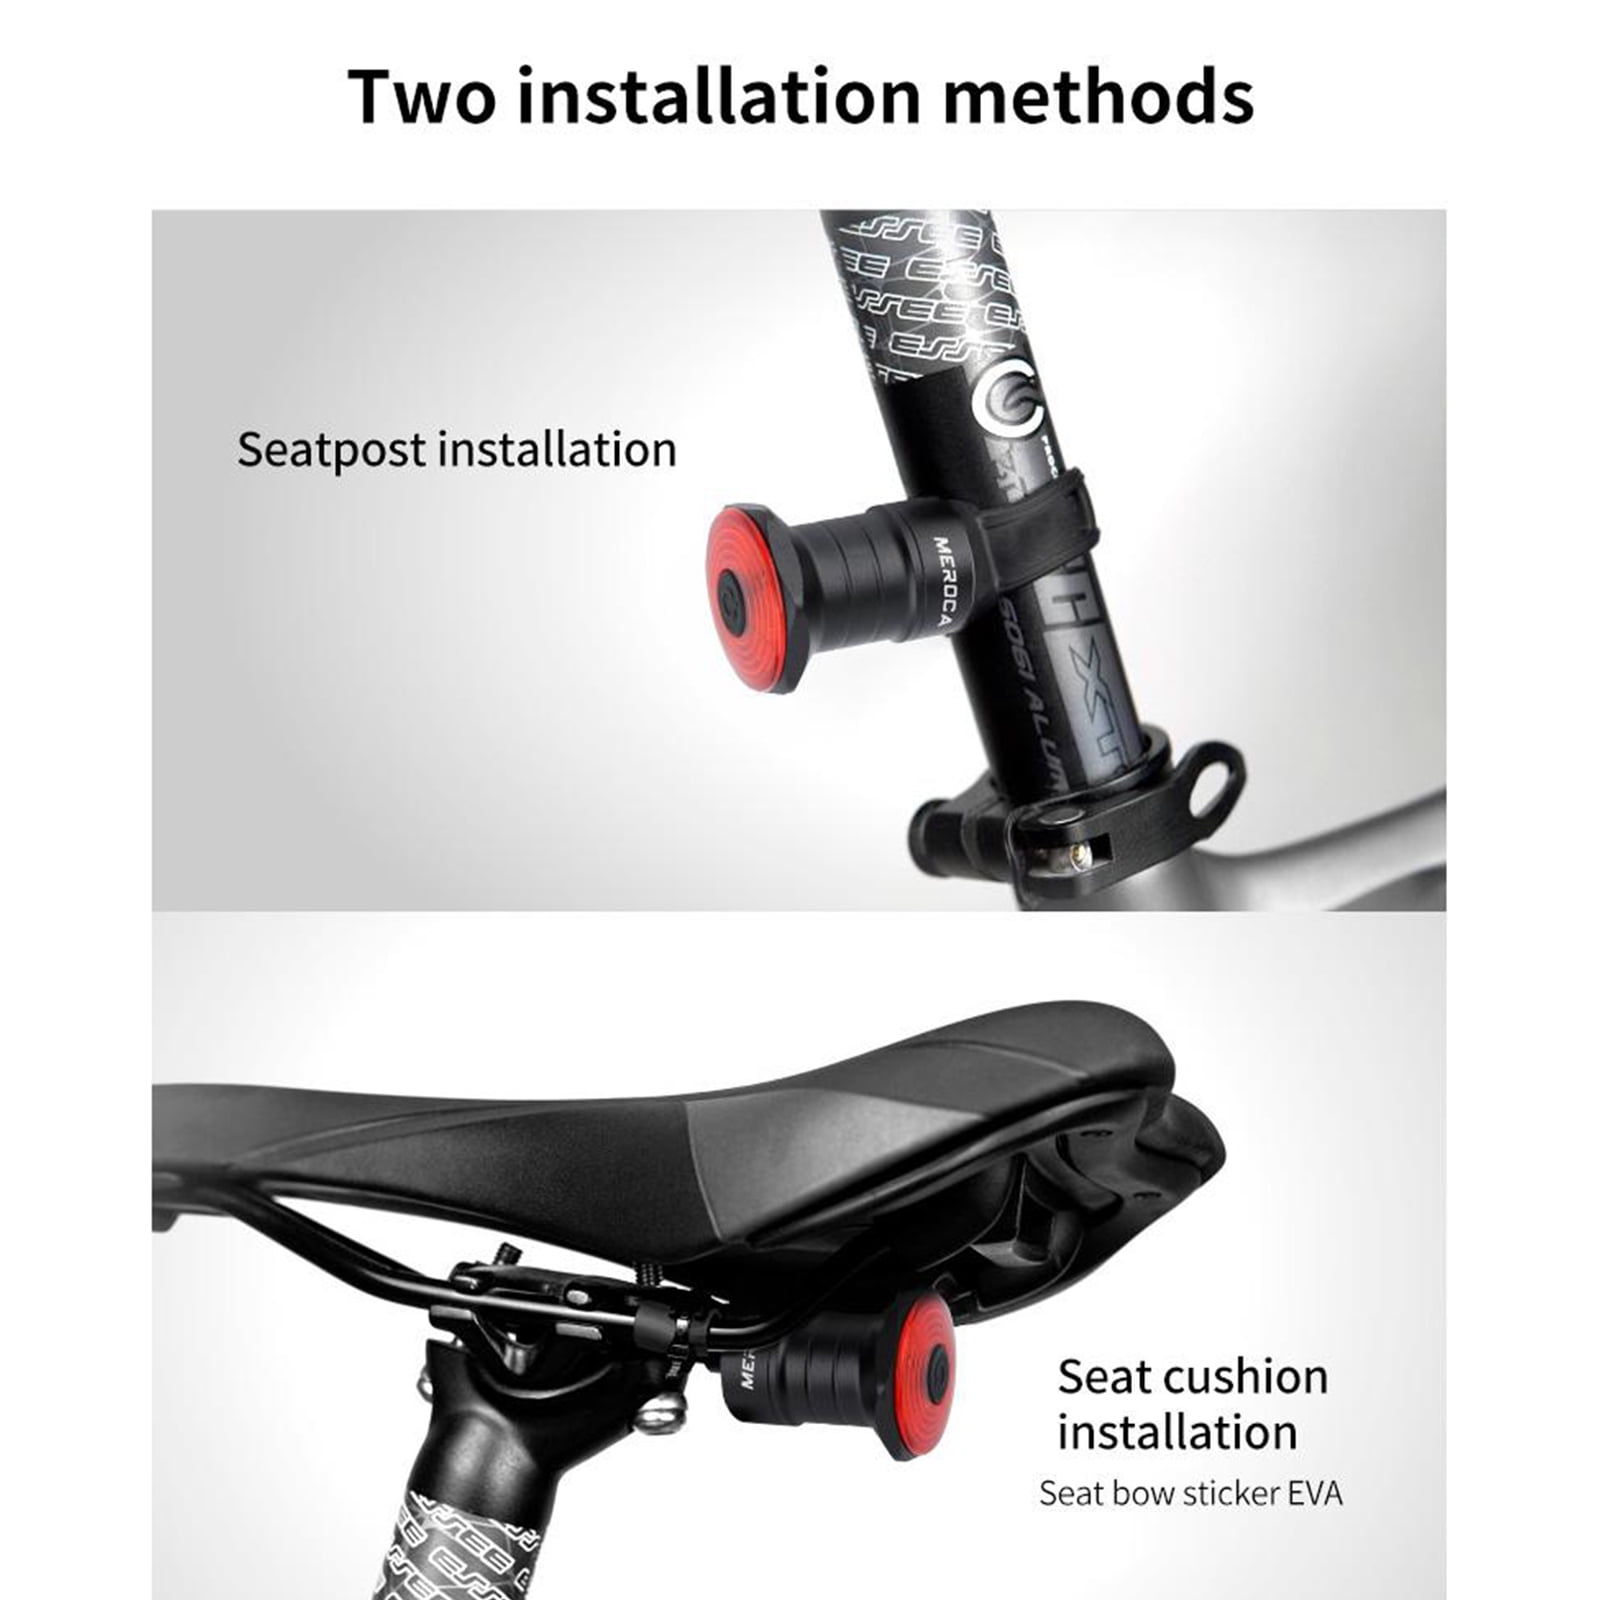 Details about   Waterproof Bicycle LED Light Smart Sensor Auto Saddle Rails Mount Bike Tail Rear